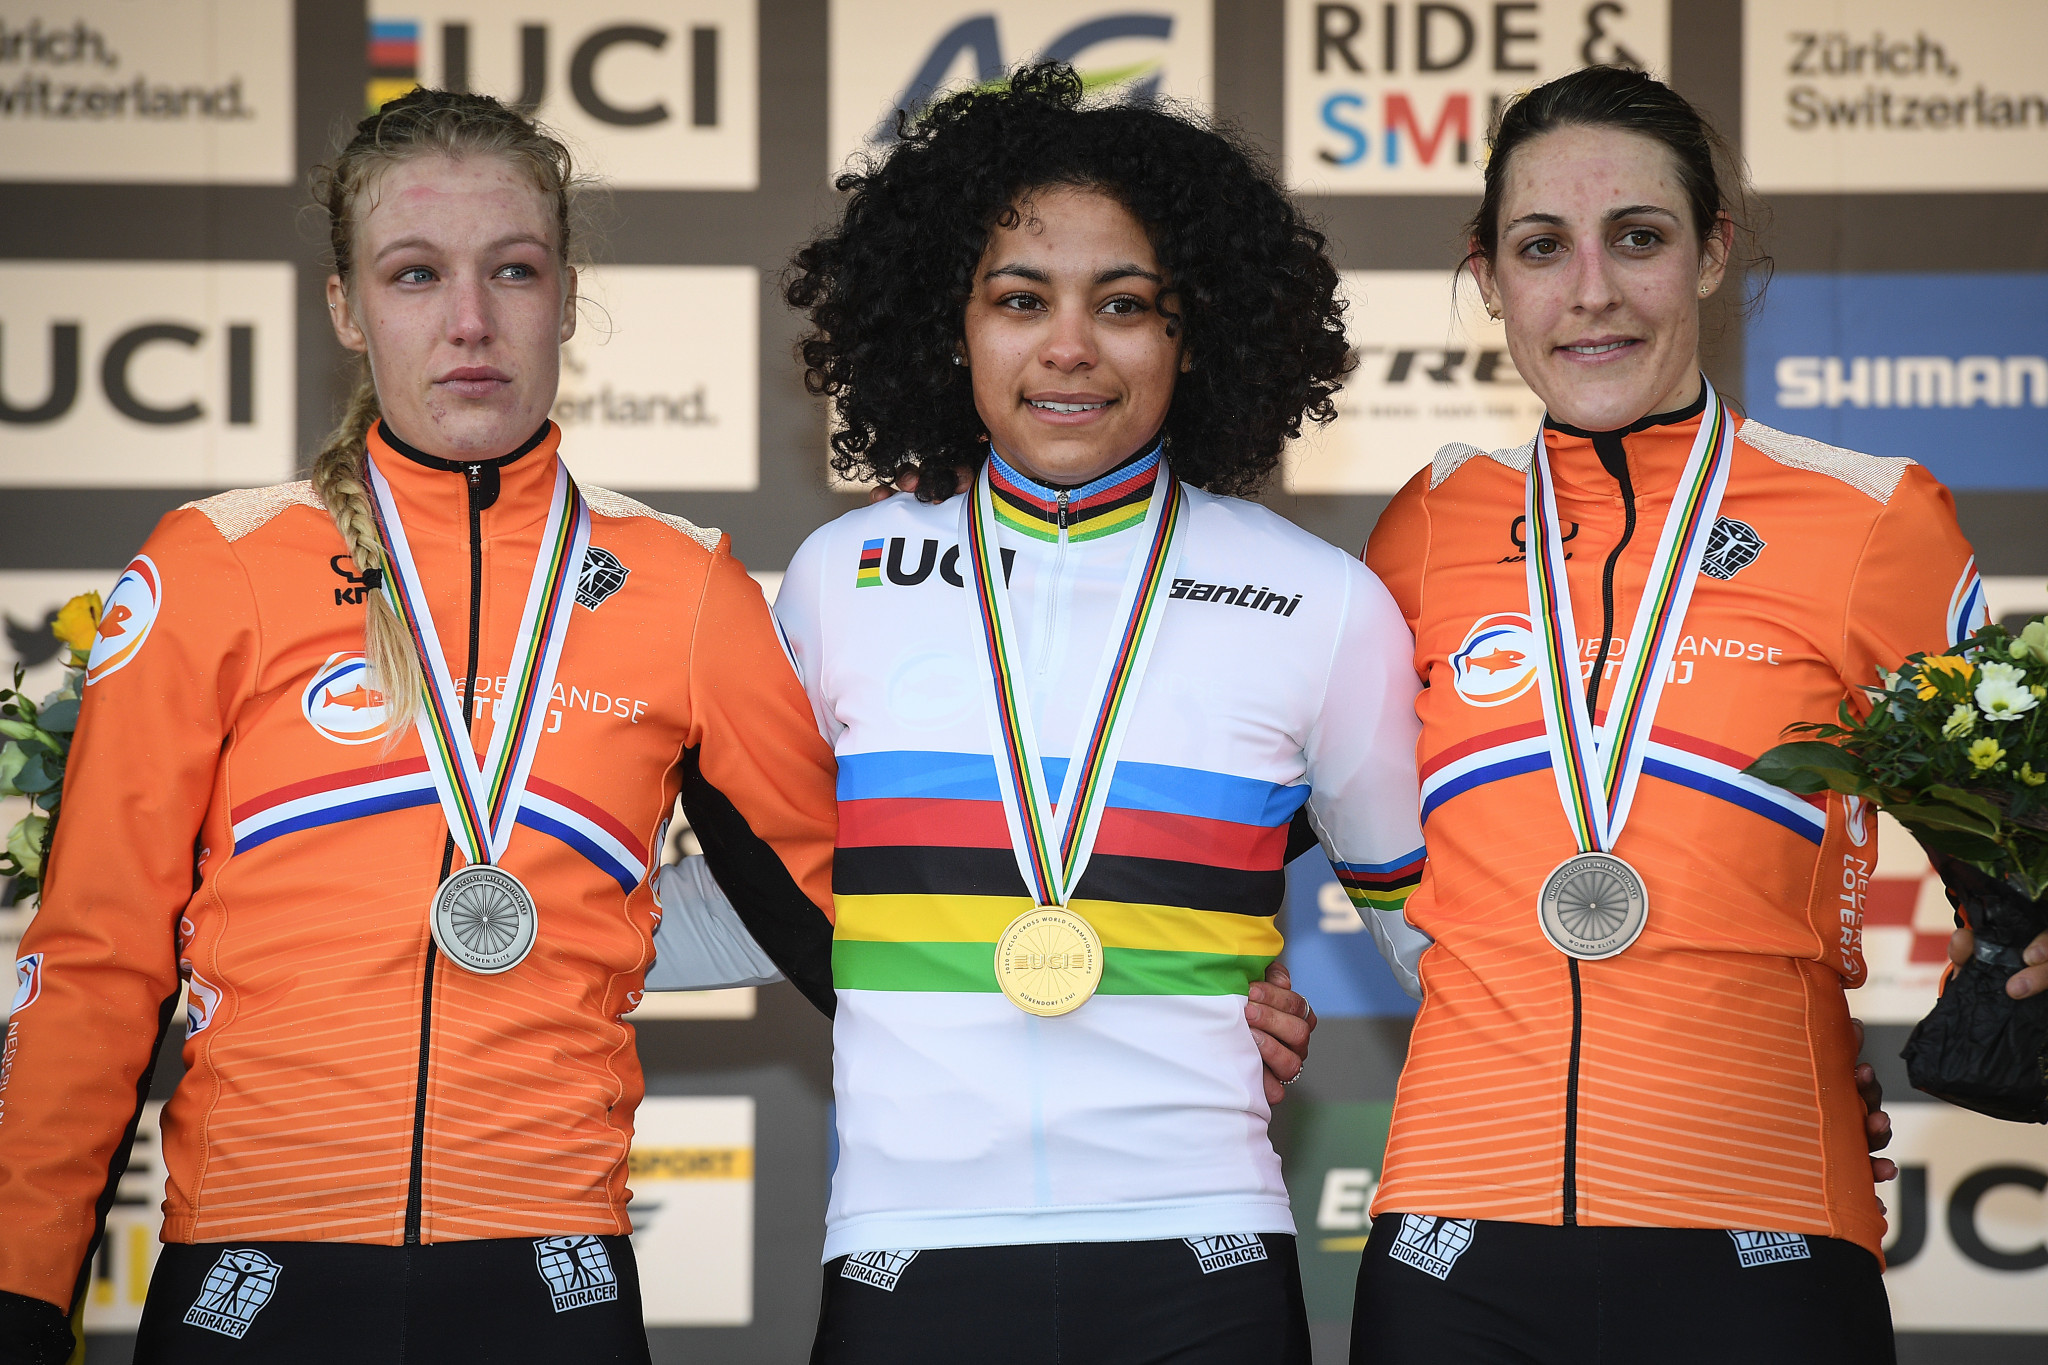 Alvarado wins women's title at UCI Cyclo-cross World Championships in sprint finish